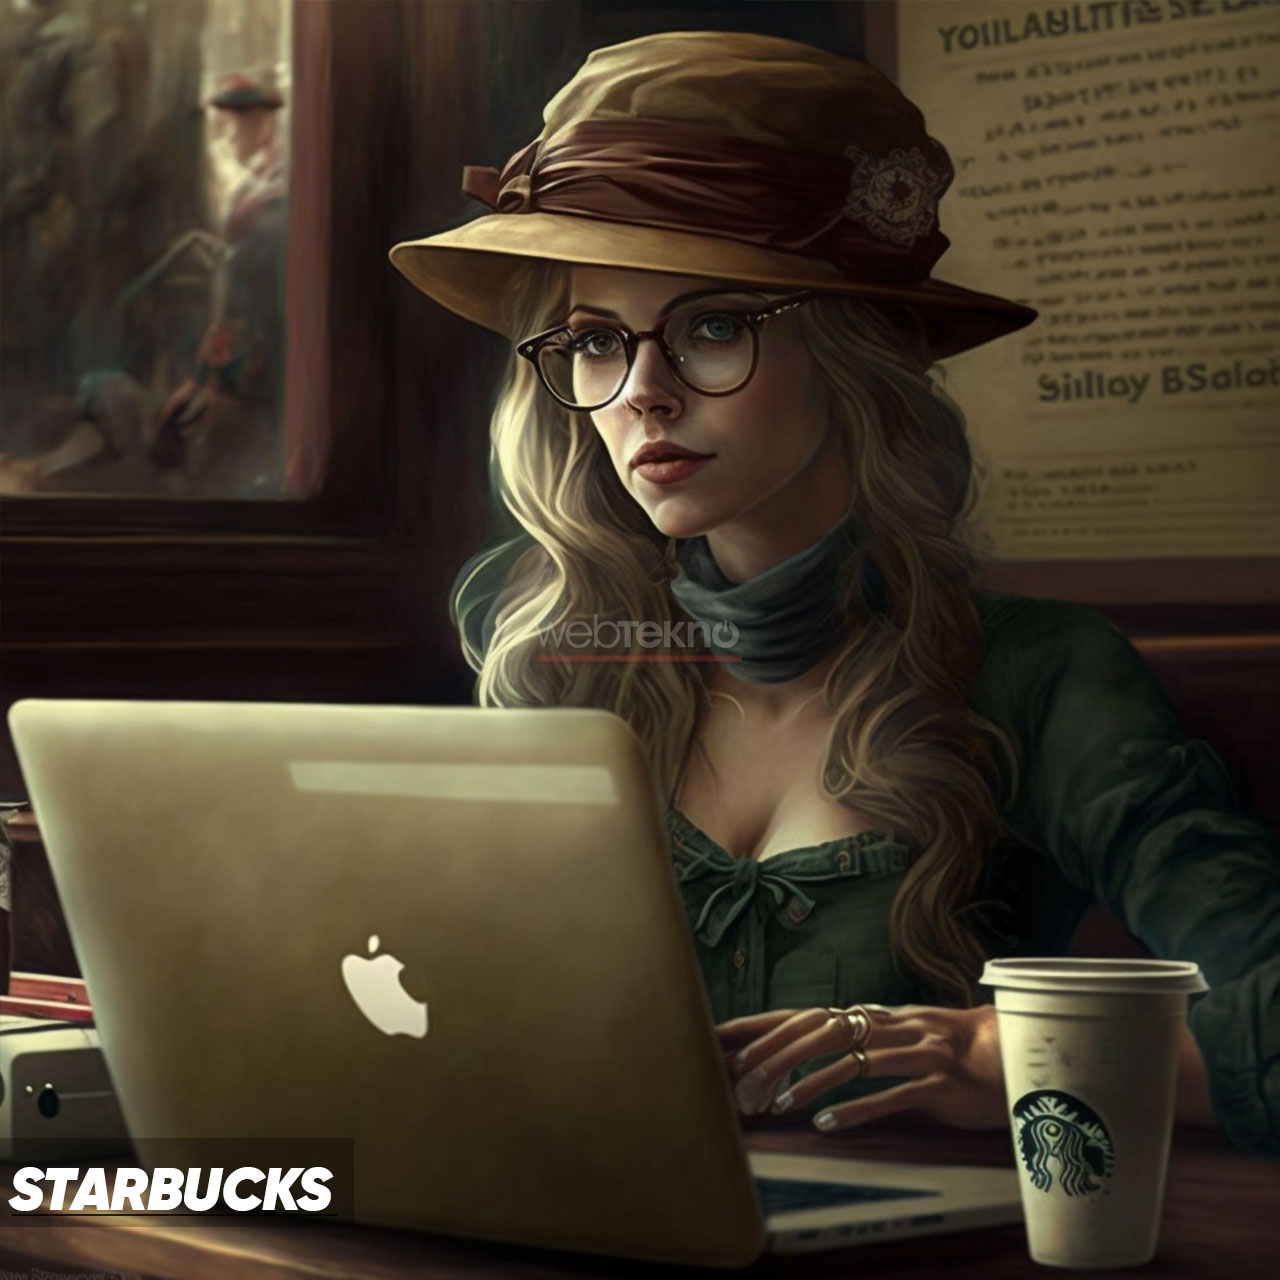 What if Starbucks were human?